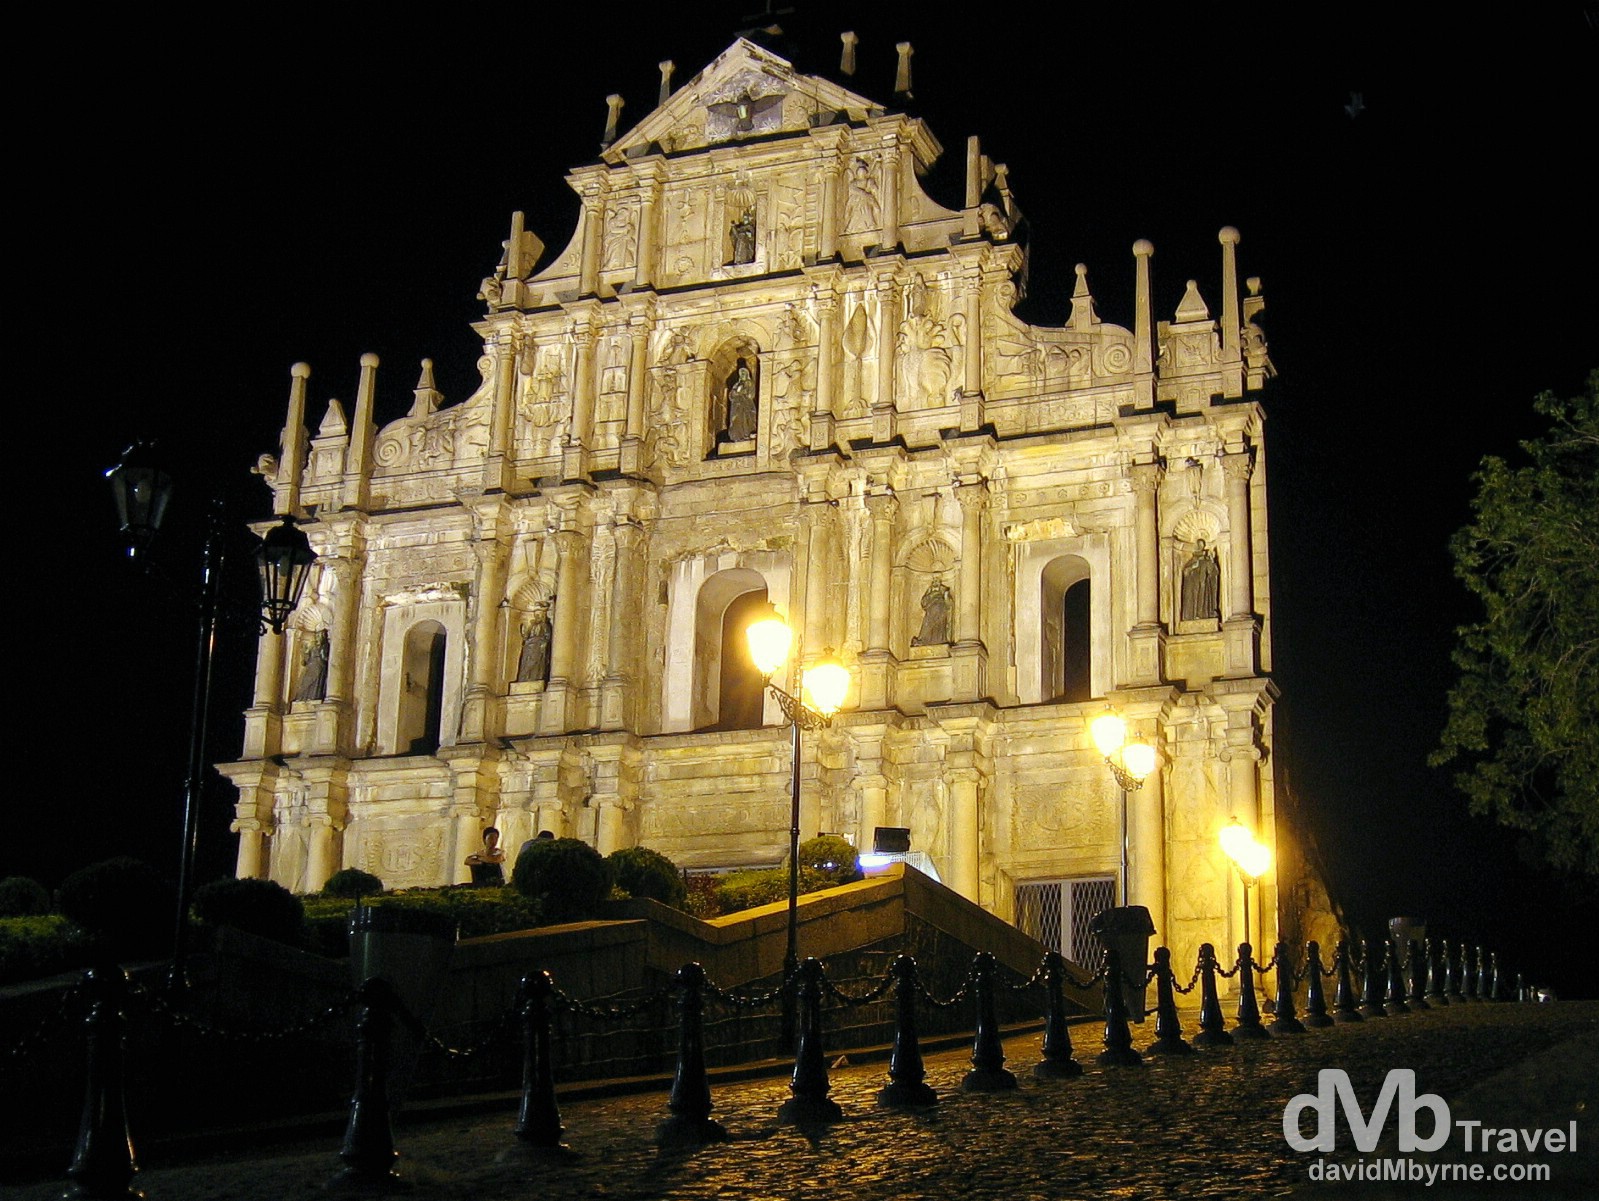 The façade of Ruins of Sao Paulo (St Paul's) in Macau, China. August 29th 2005.